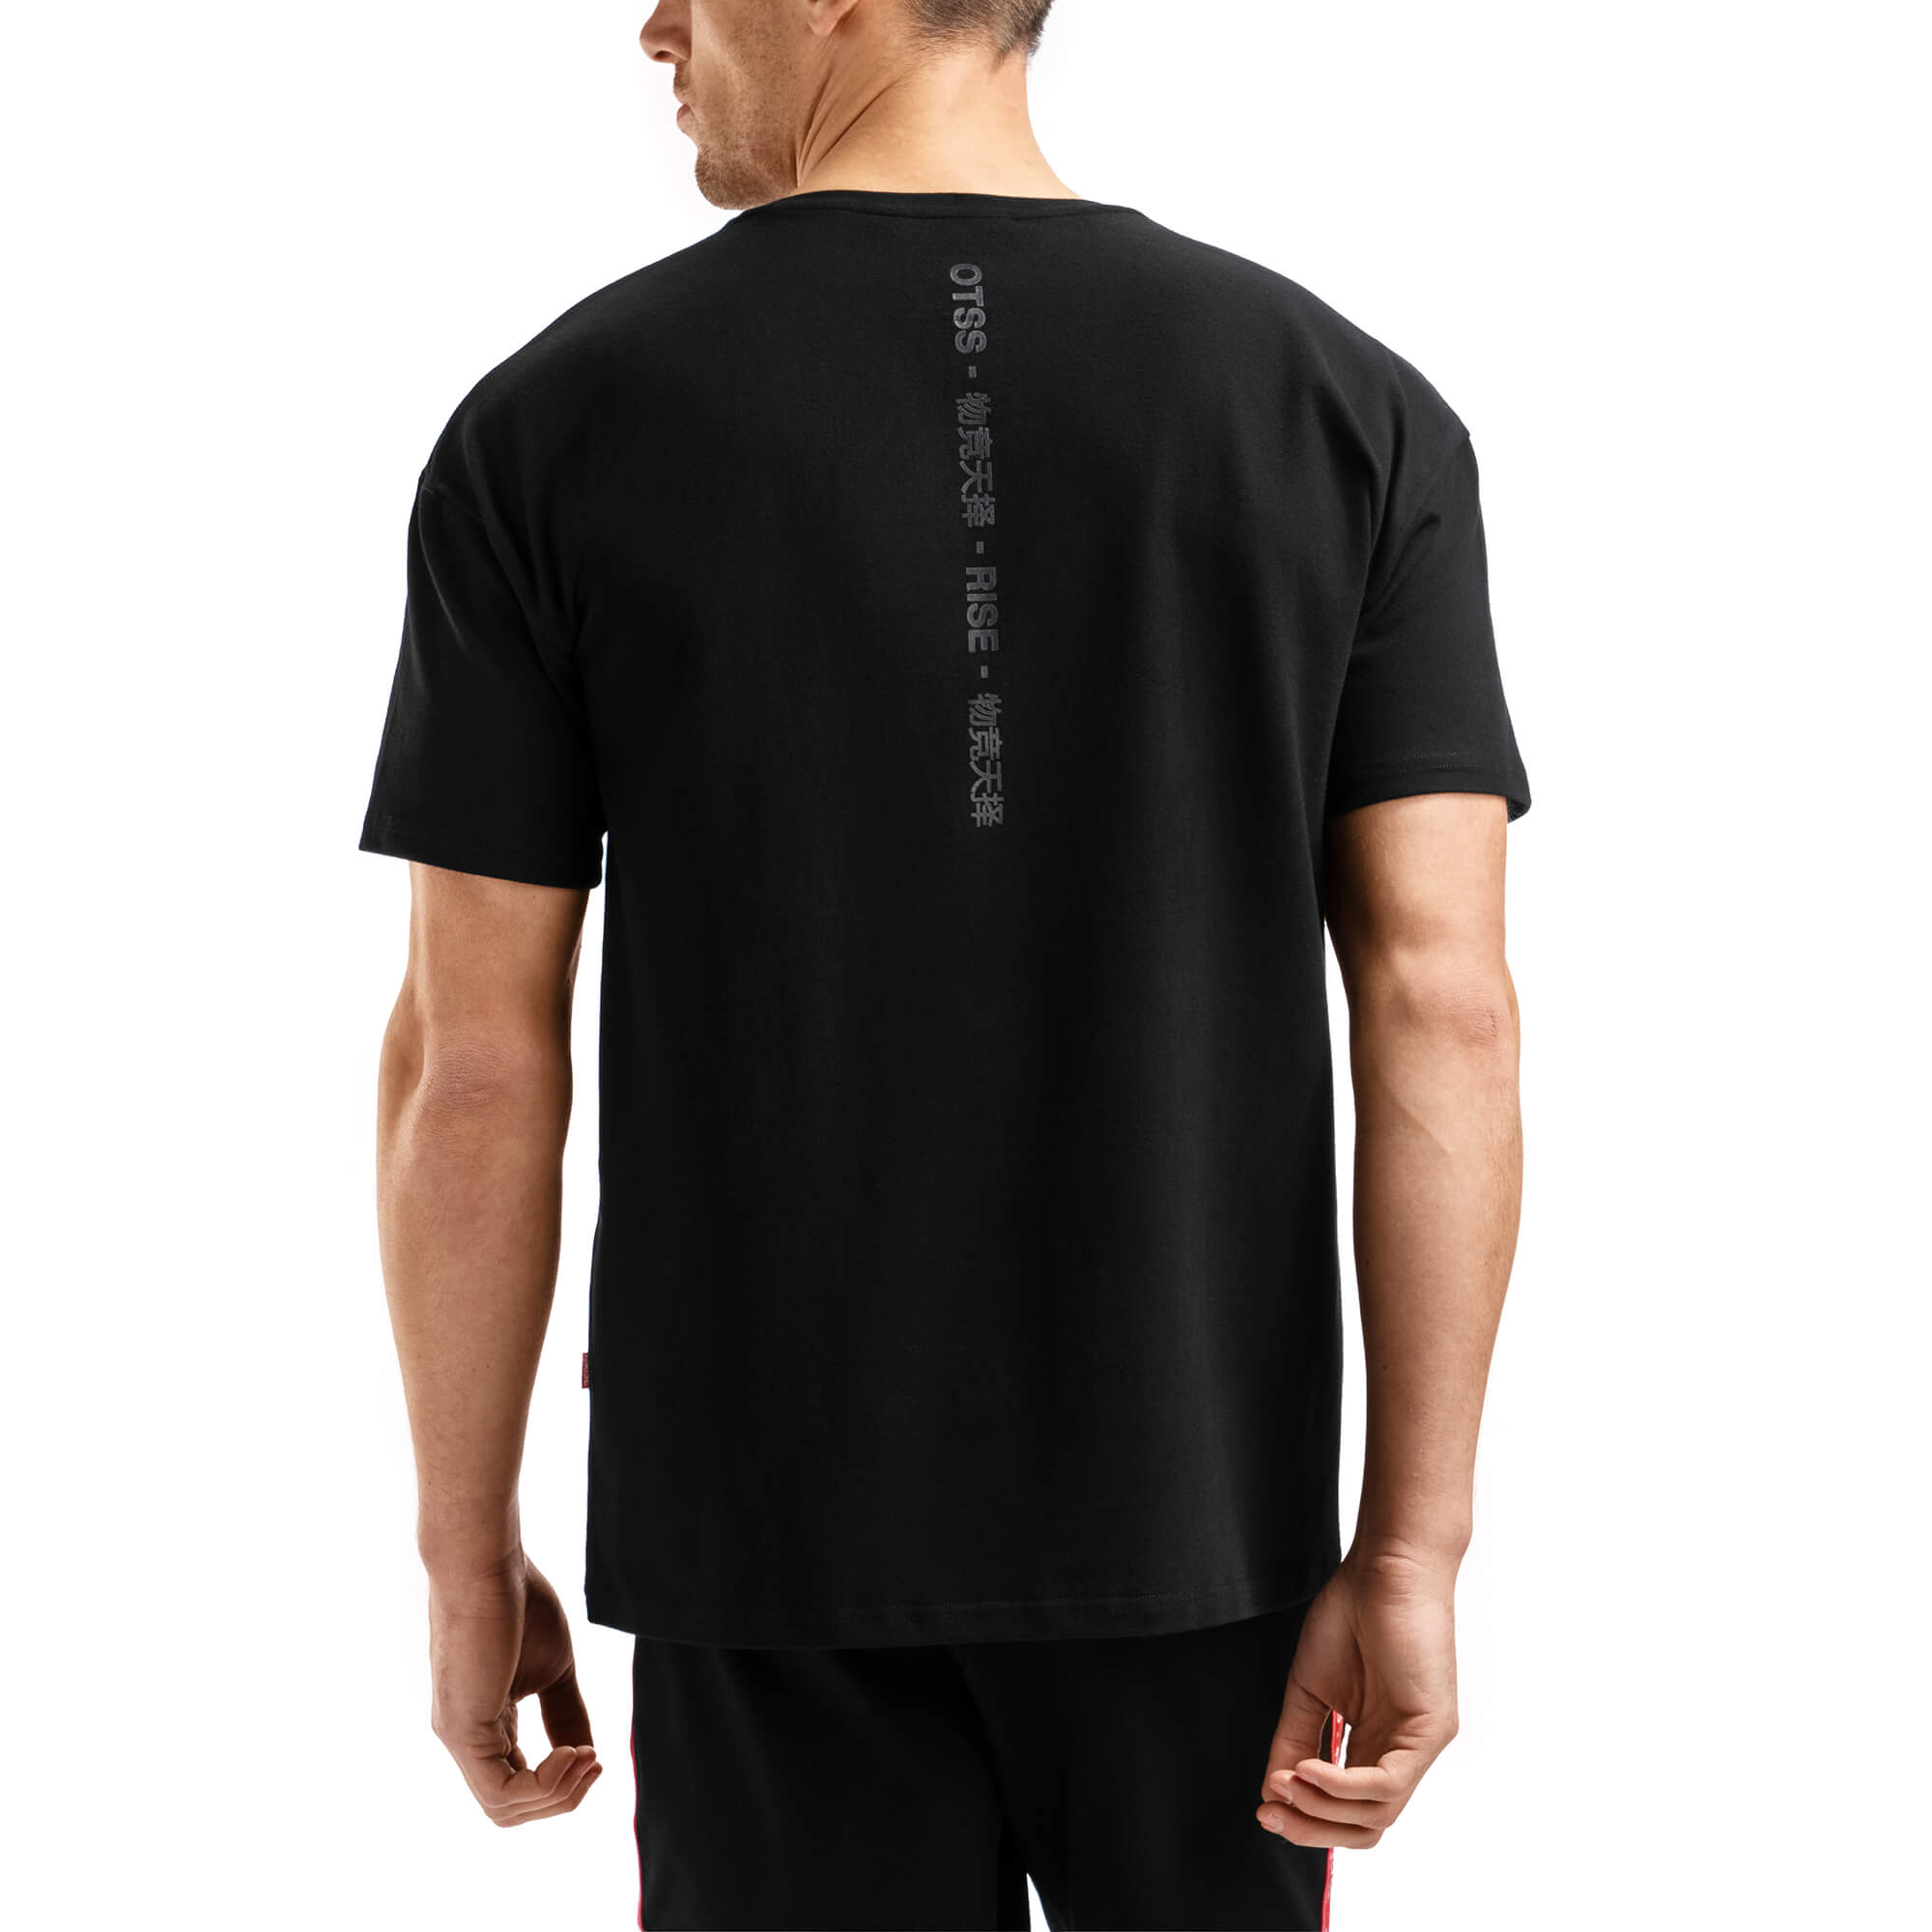 Amplitude Warm Up T-Shirt - Black